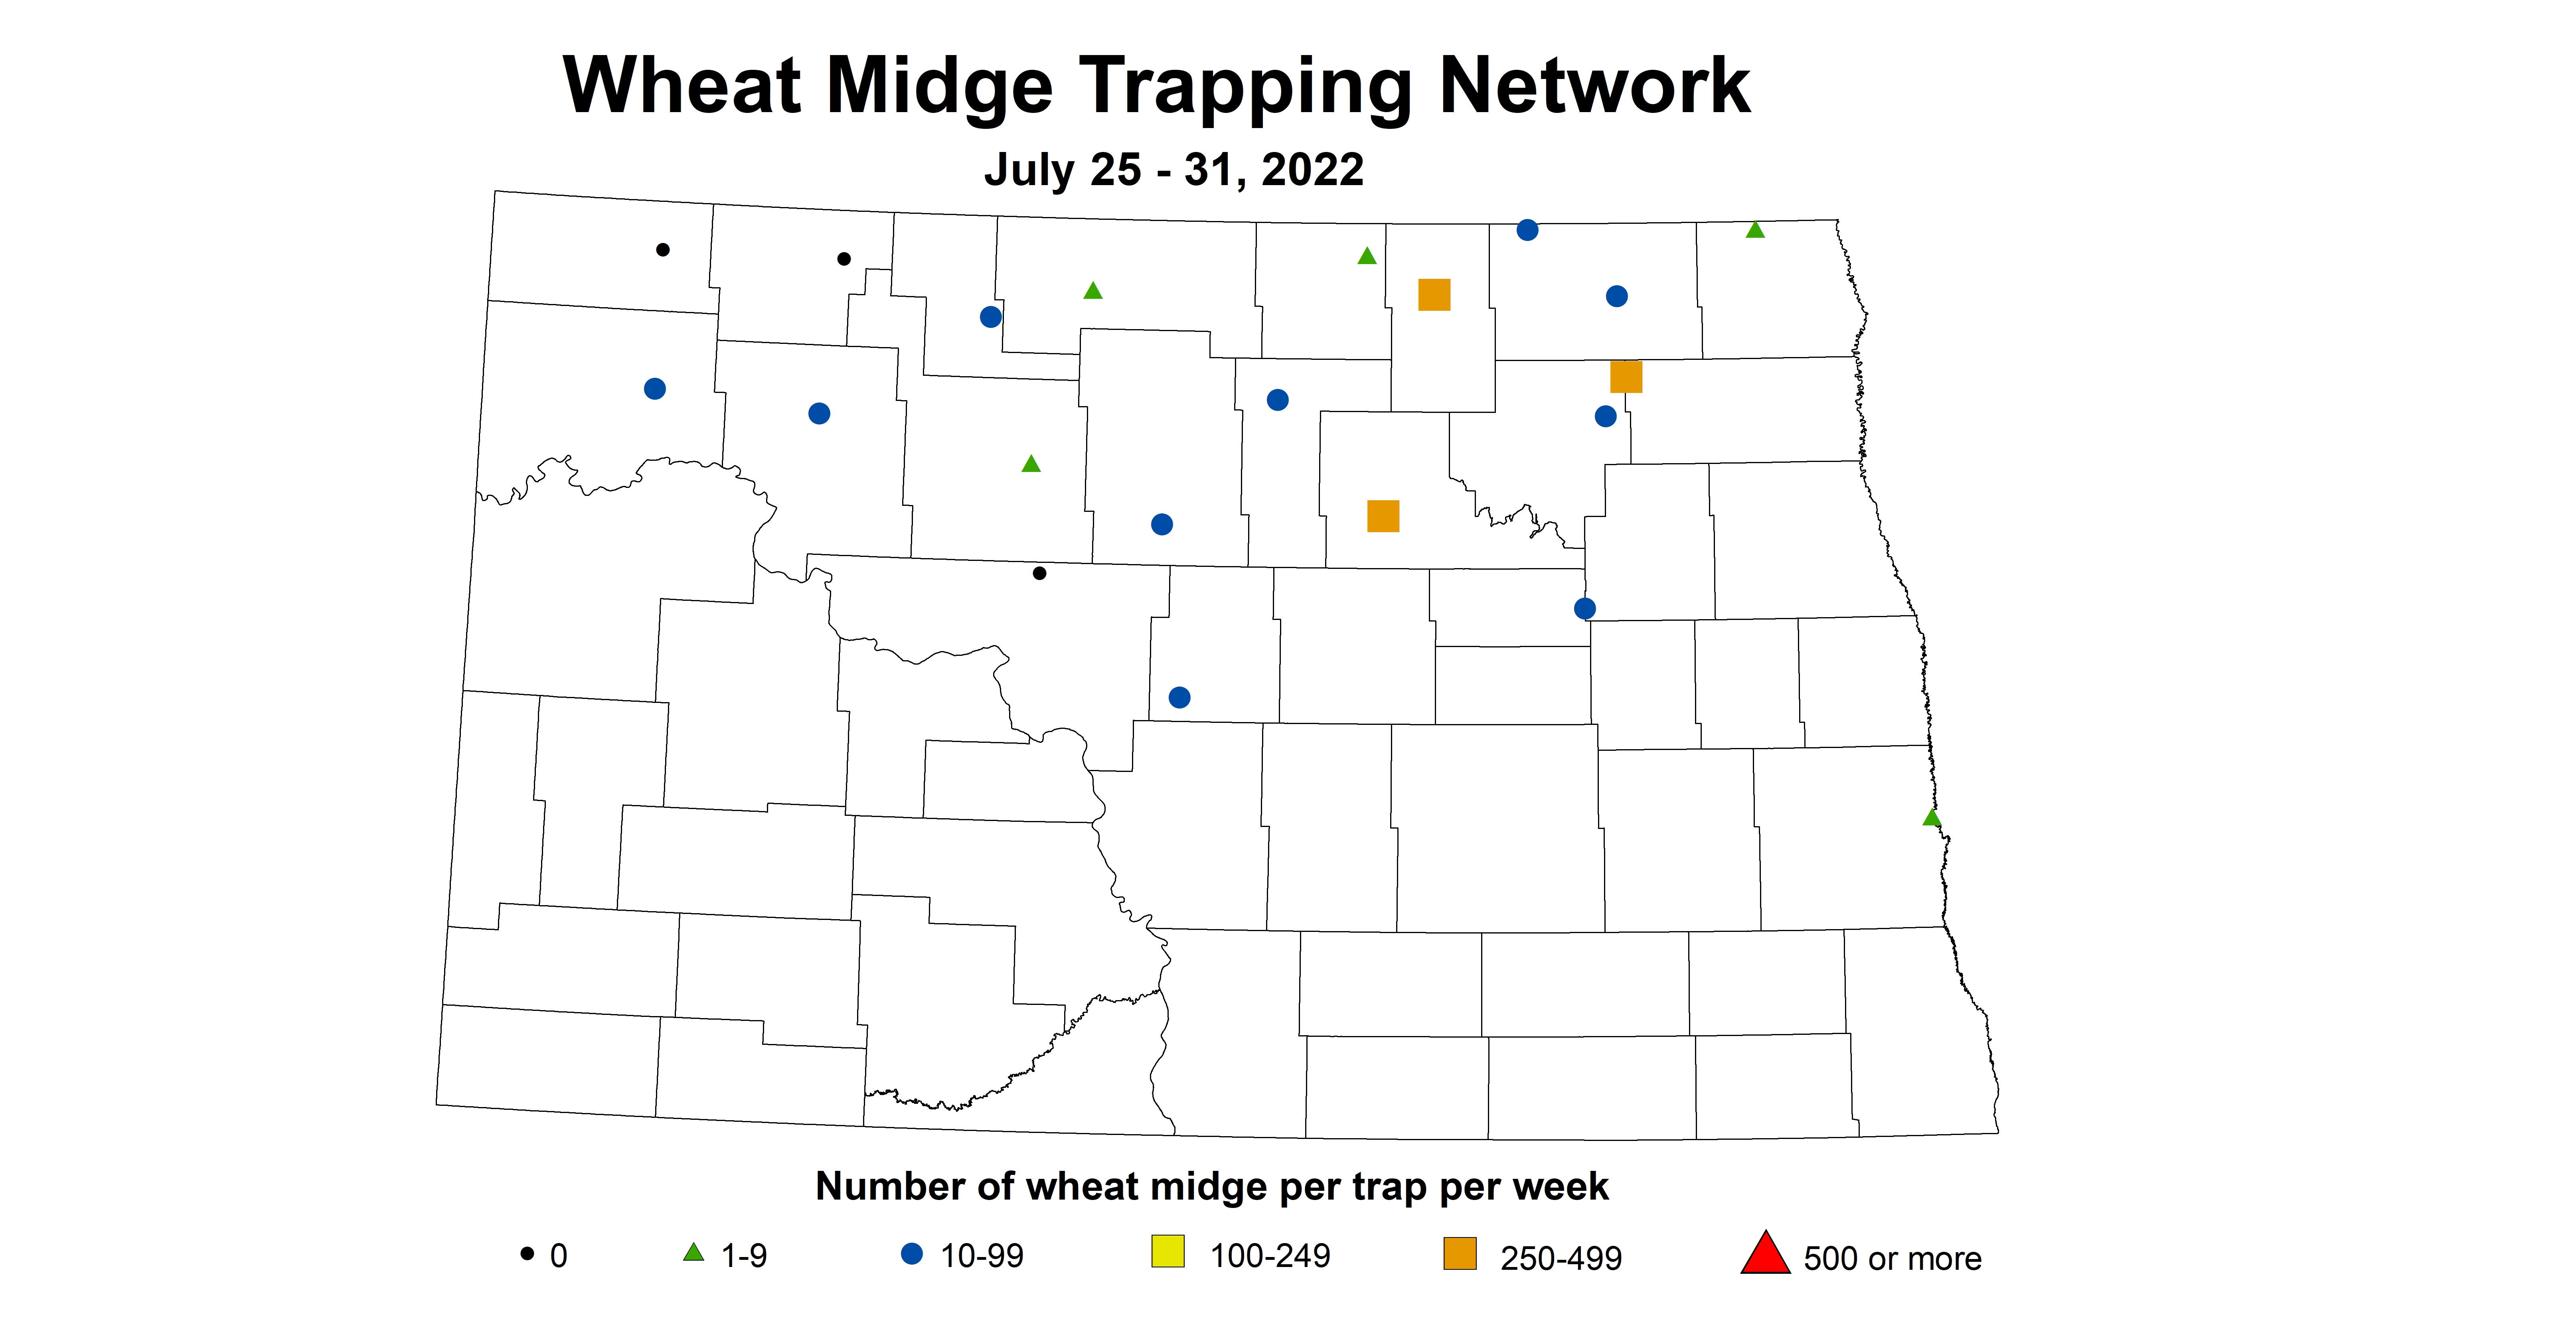 wheat midge number per trap per week 7.25-7.31.jpg